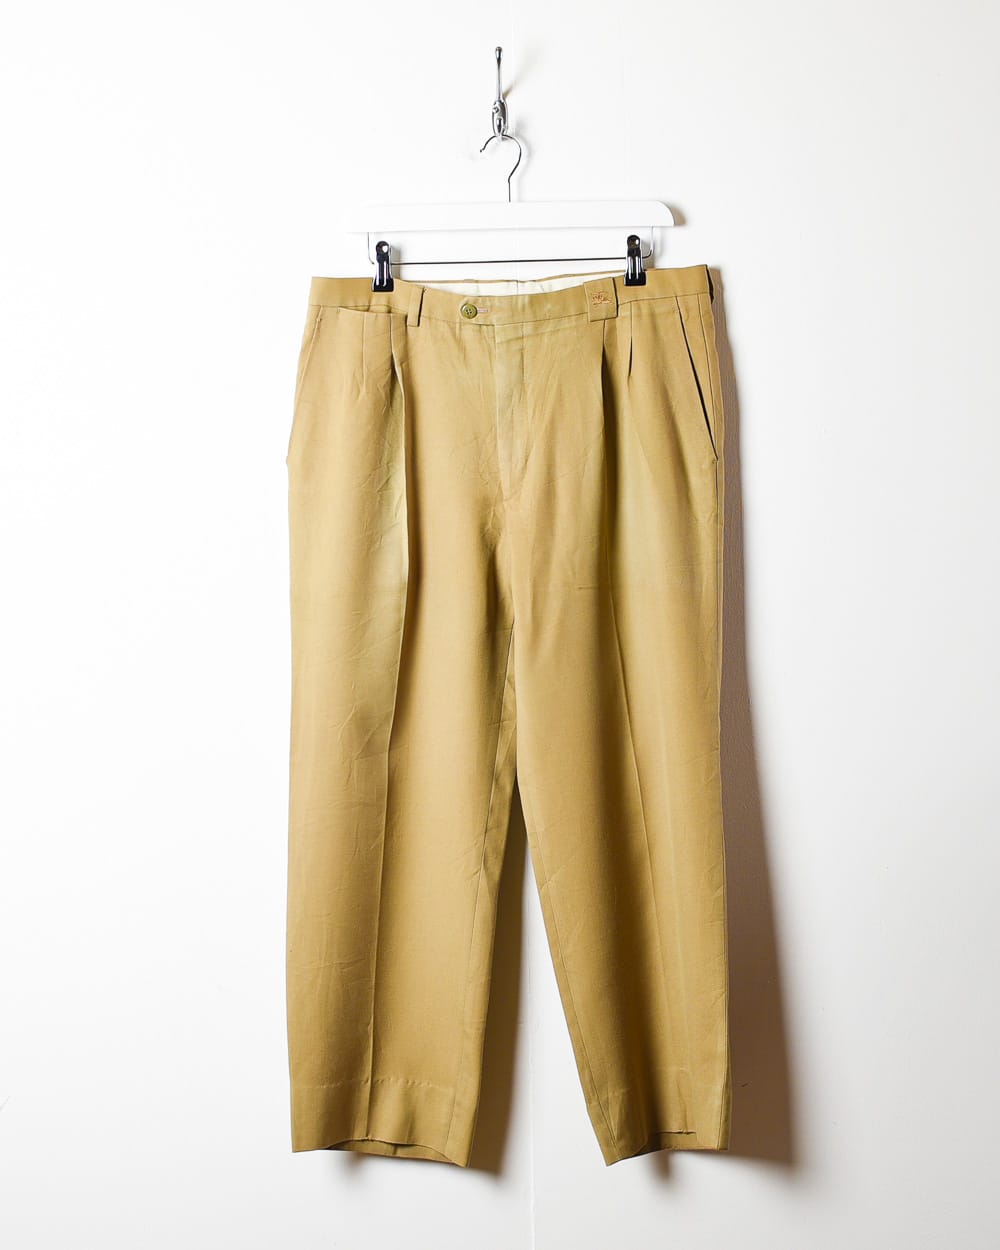 Neutral Burberry Trousers - W34 L27